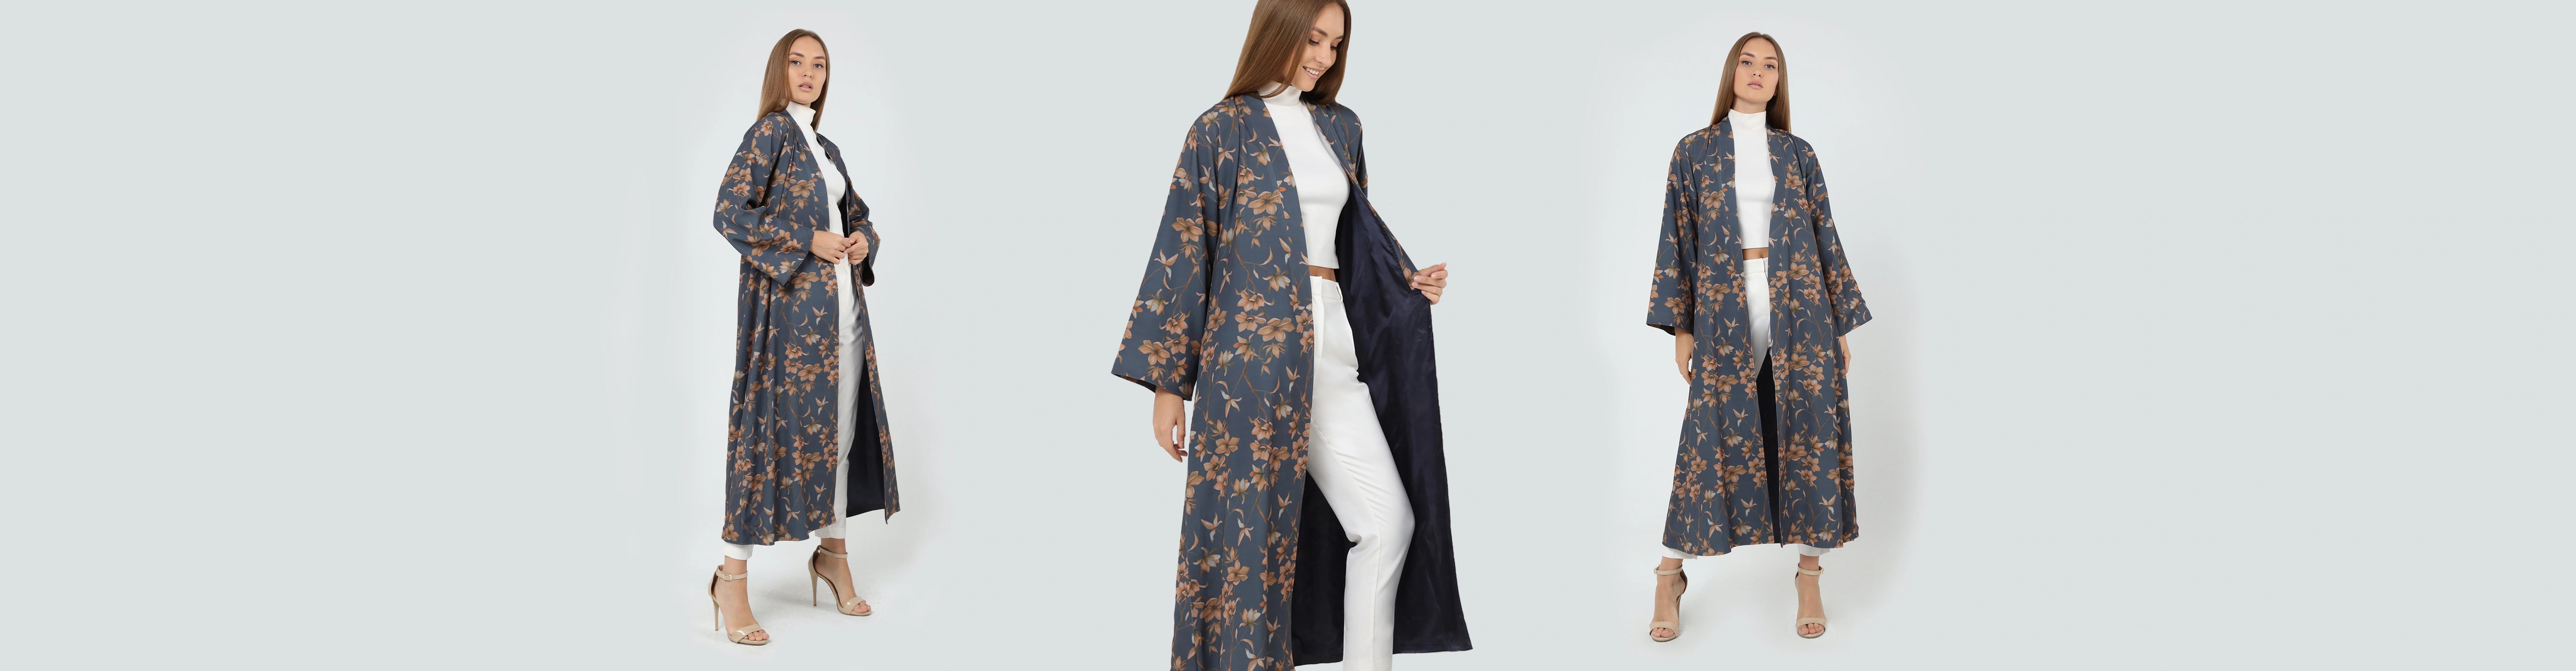 18 Ways To Dress Up With Kimono Outfits – Modora UK